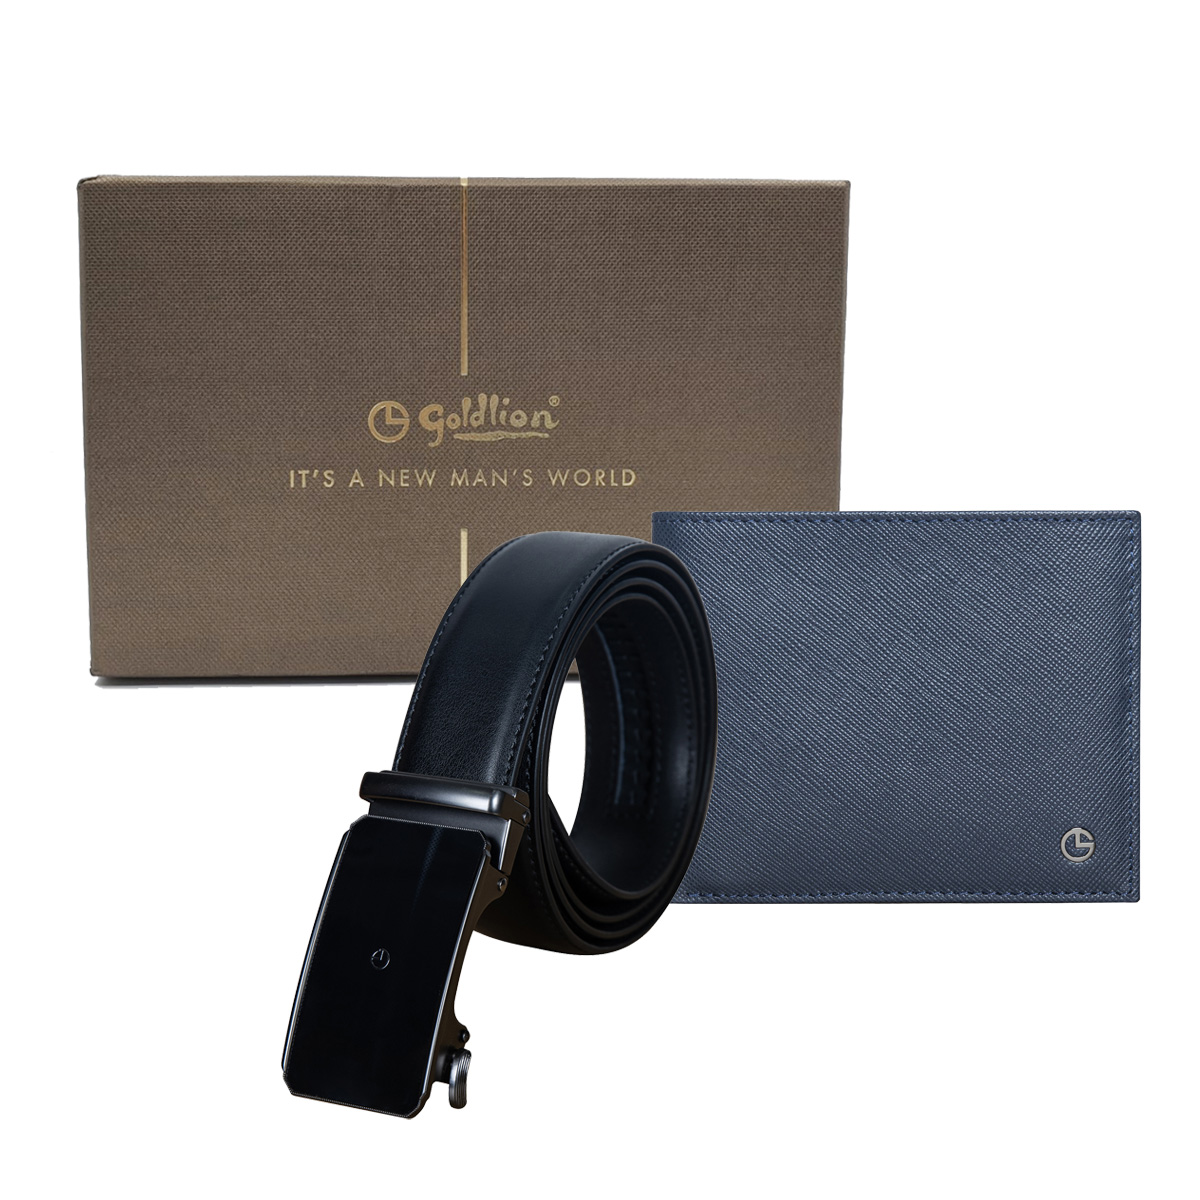 [Online Exclusive] Goldlion Genuine Leather RFID Wallet & Auto Lock Belt Gift Set (8 Cards Slot, Navy Colour)